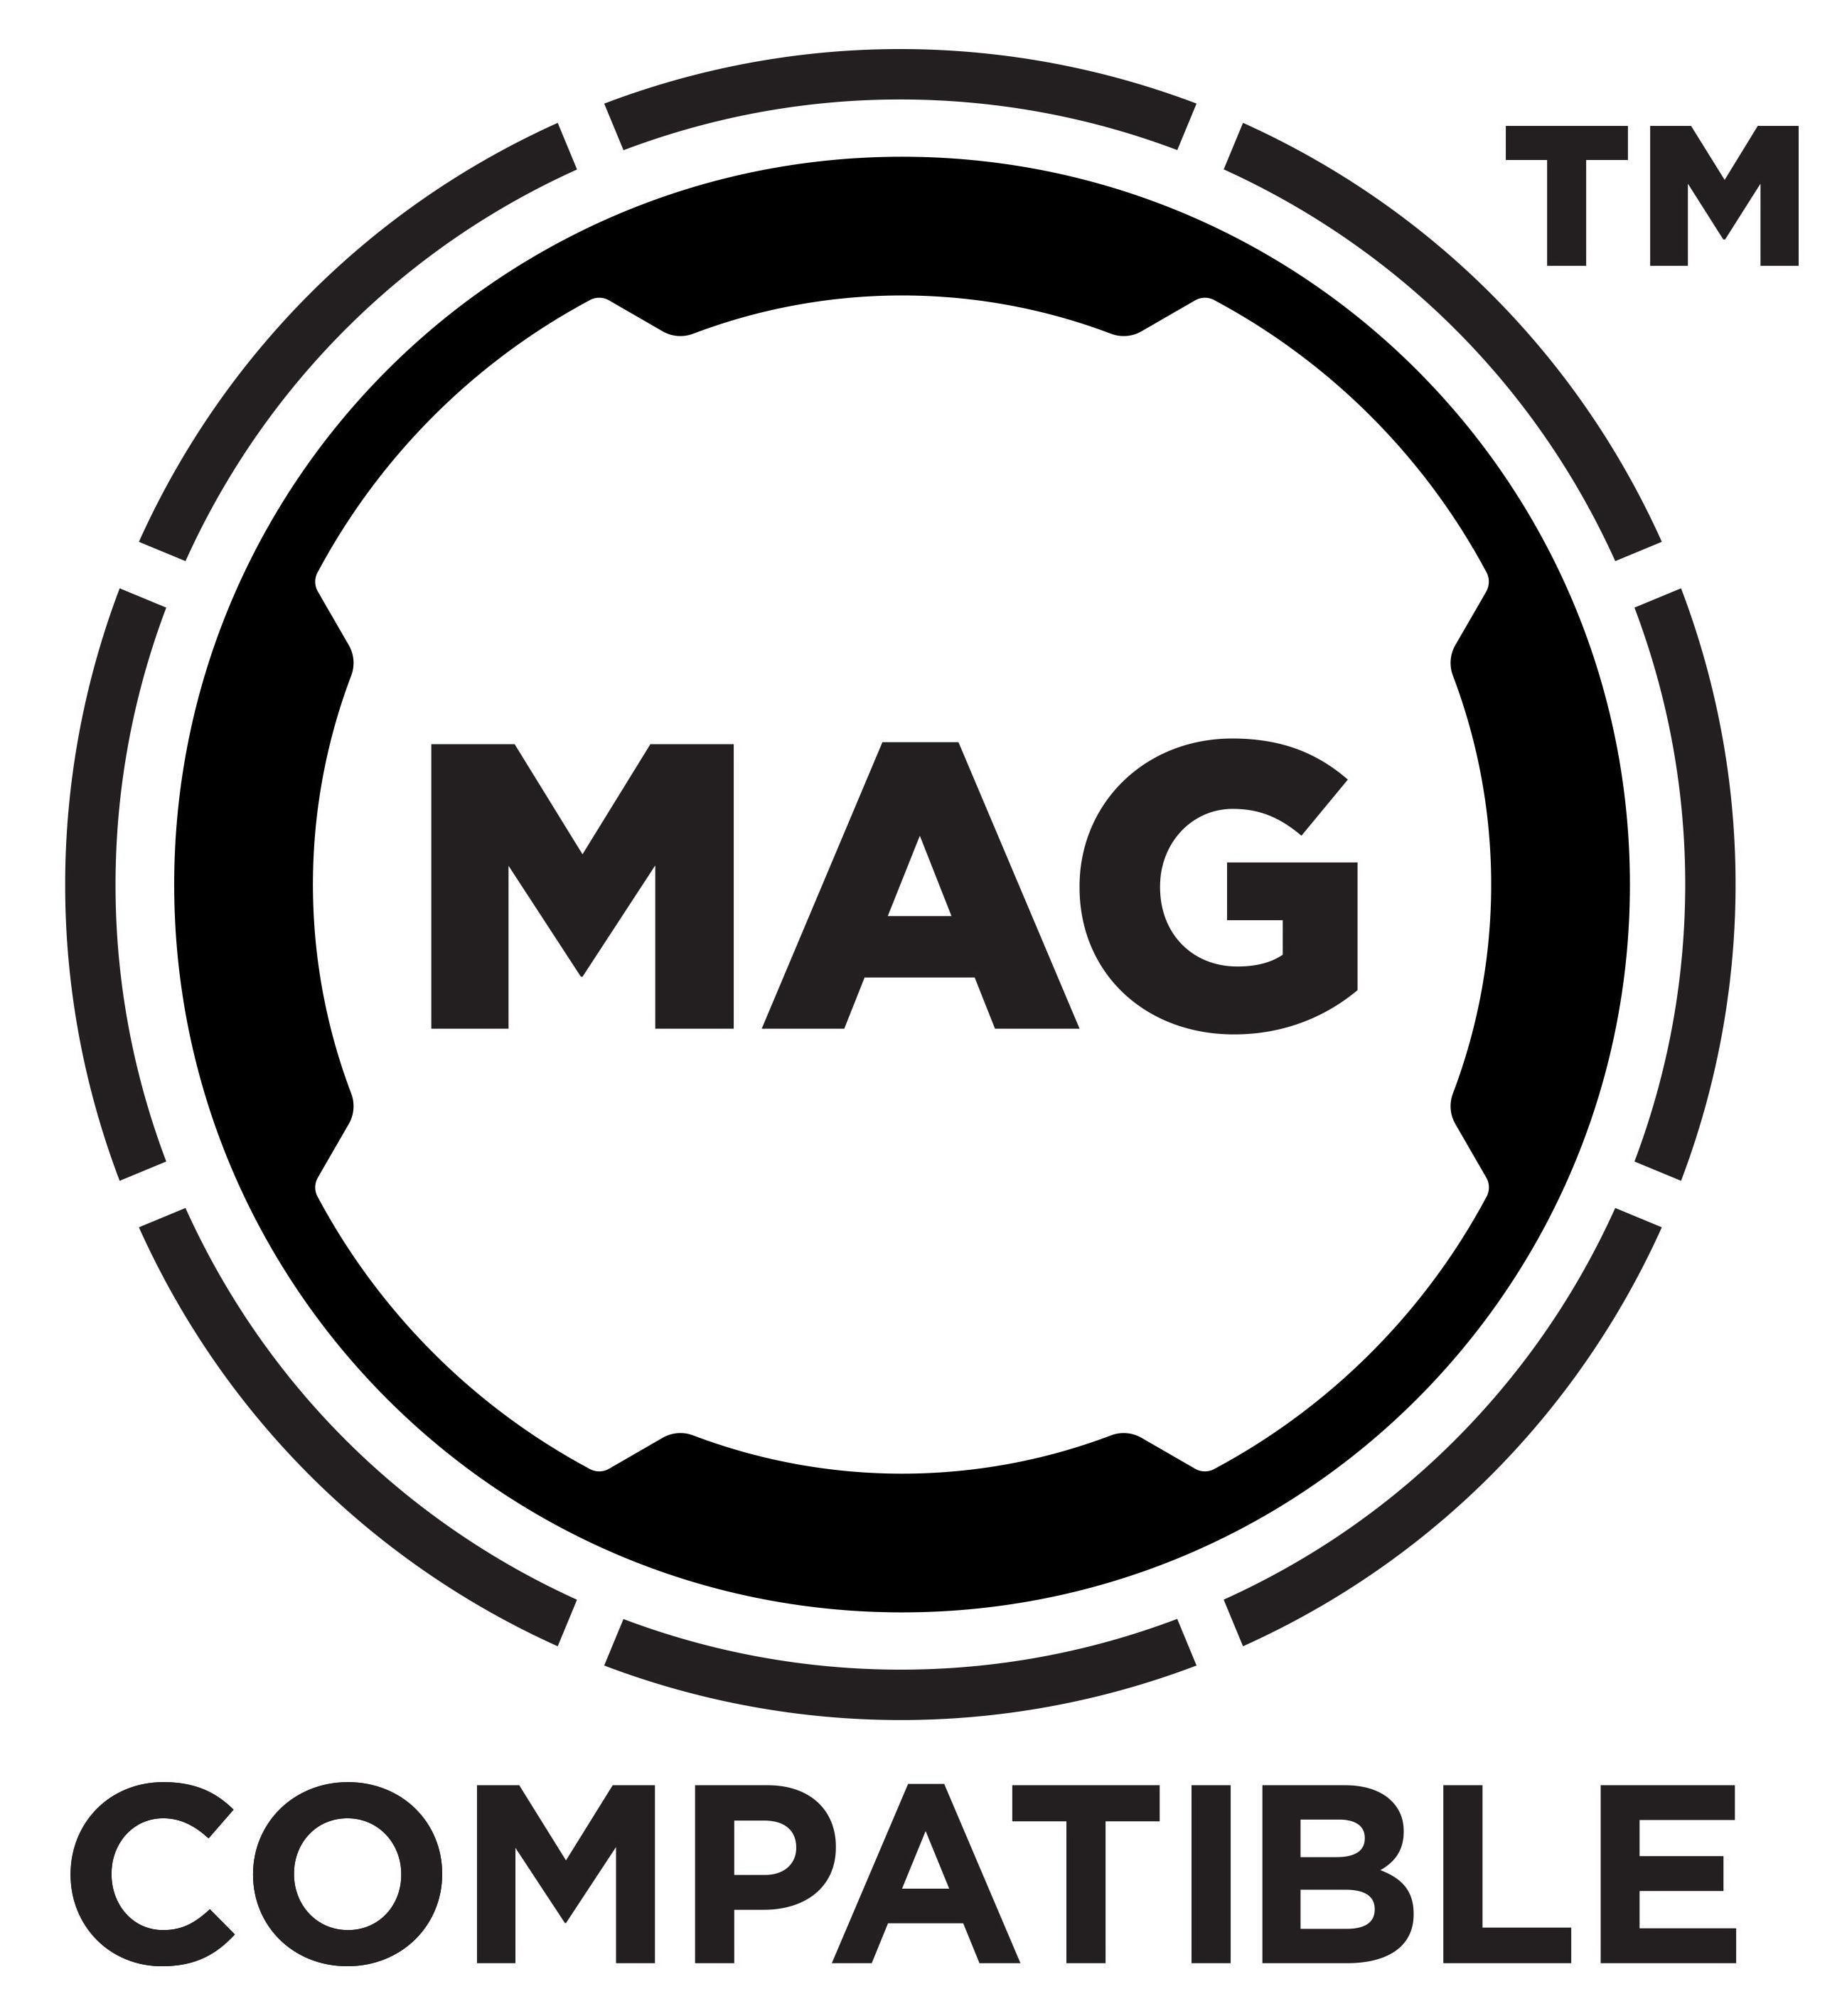  MAG COMPATIBLE TM